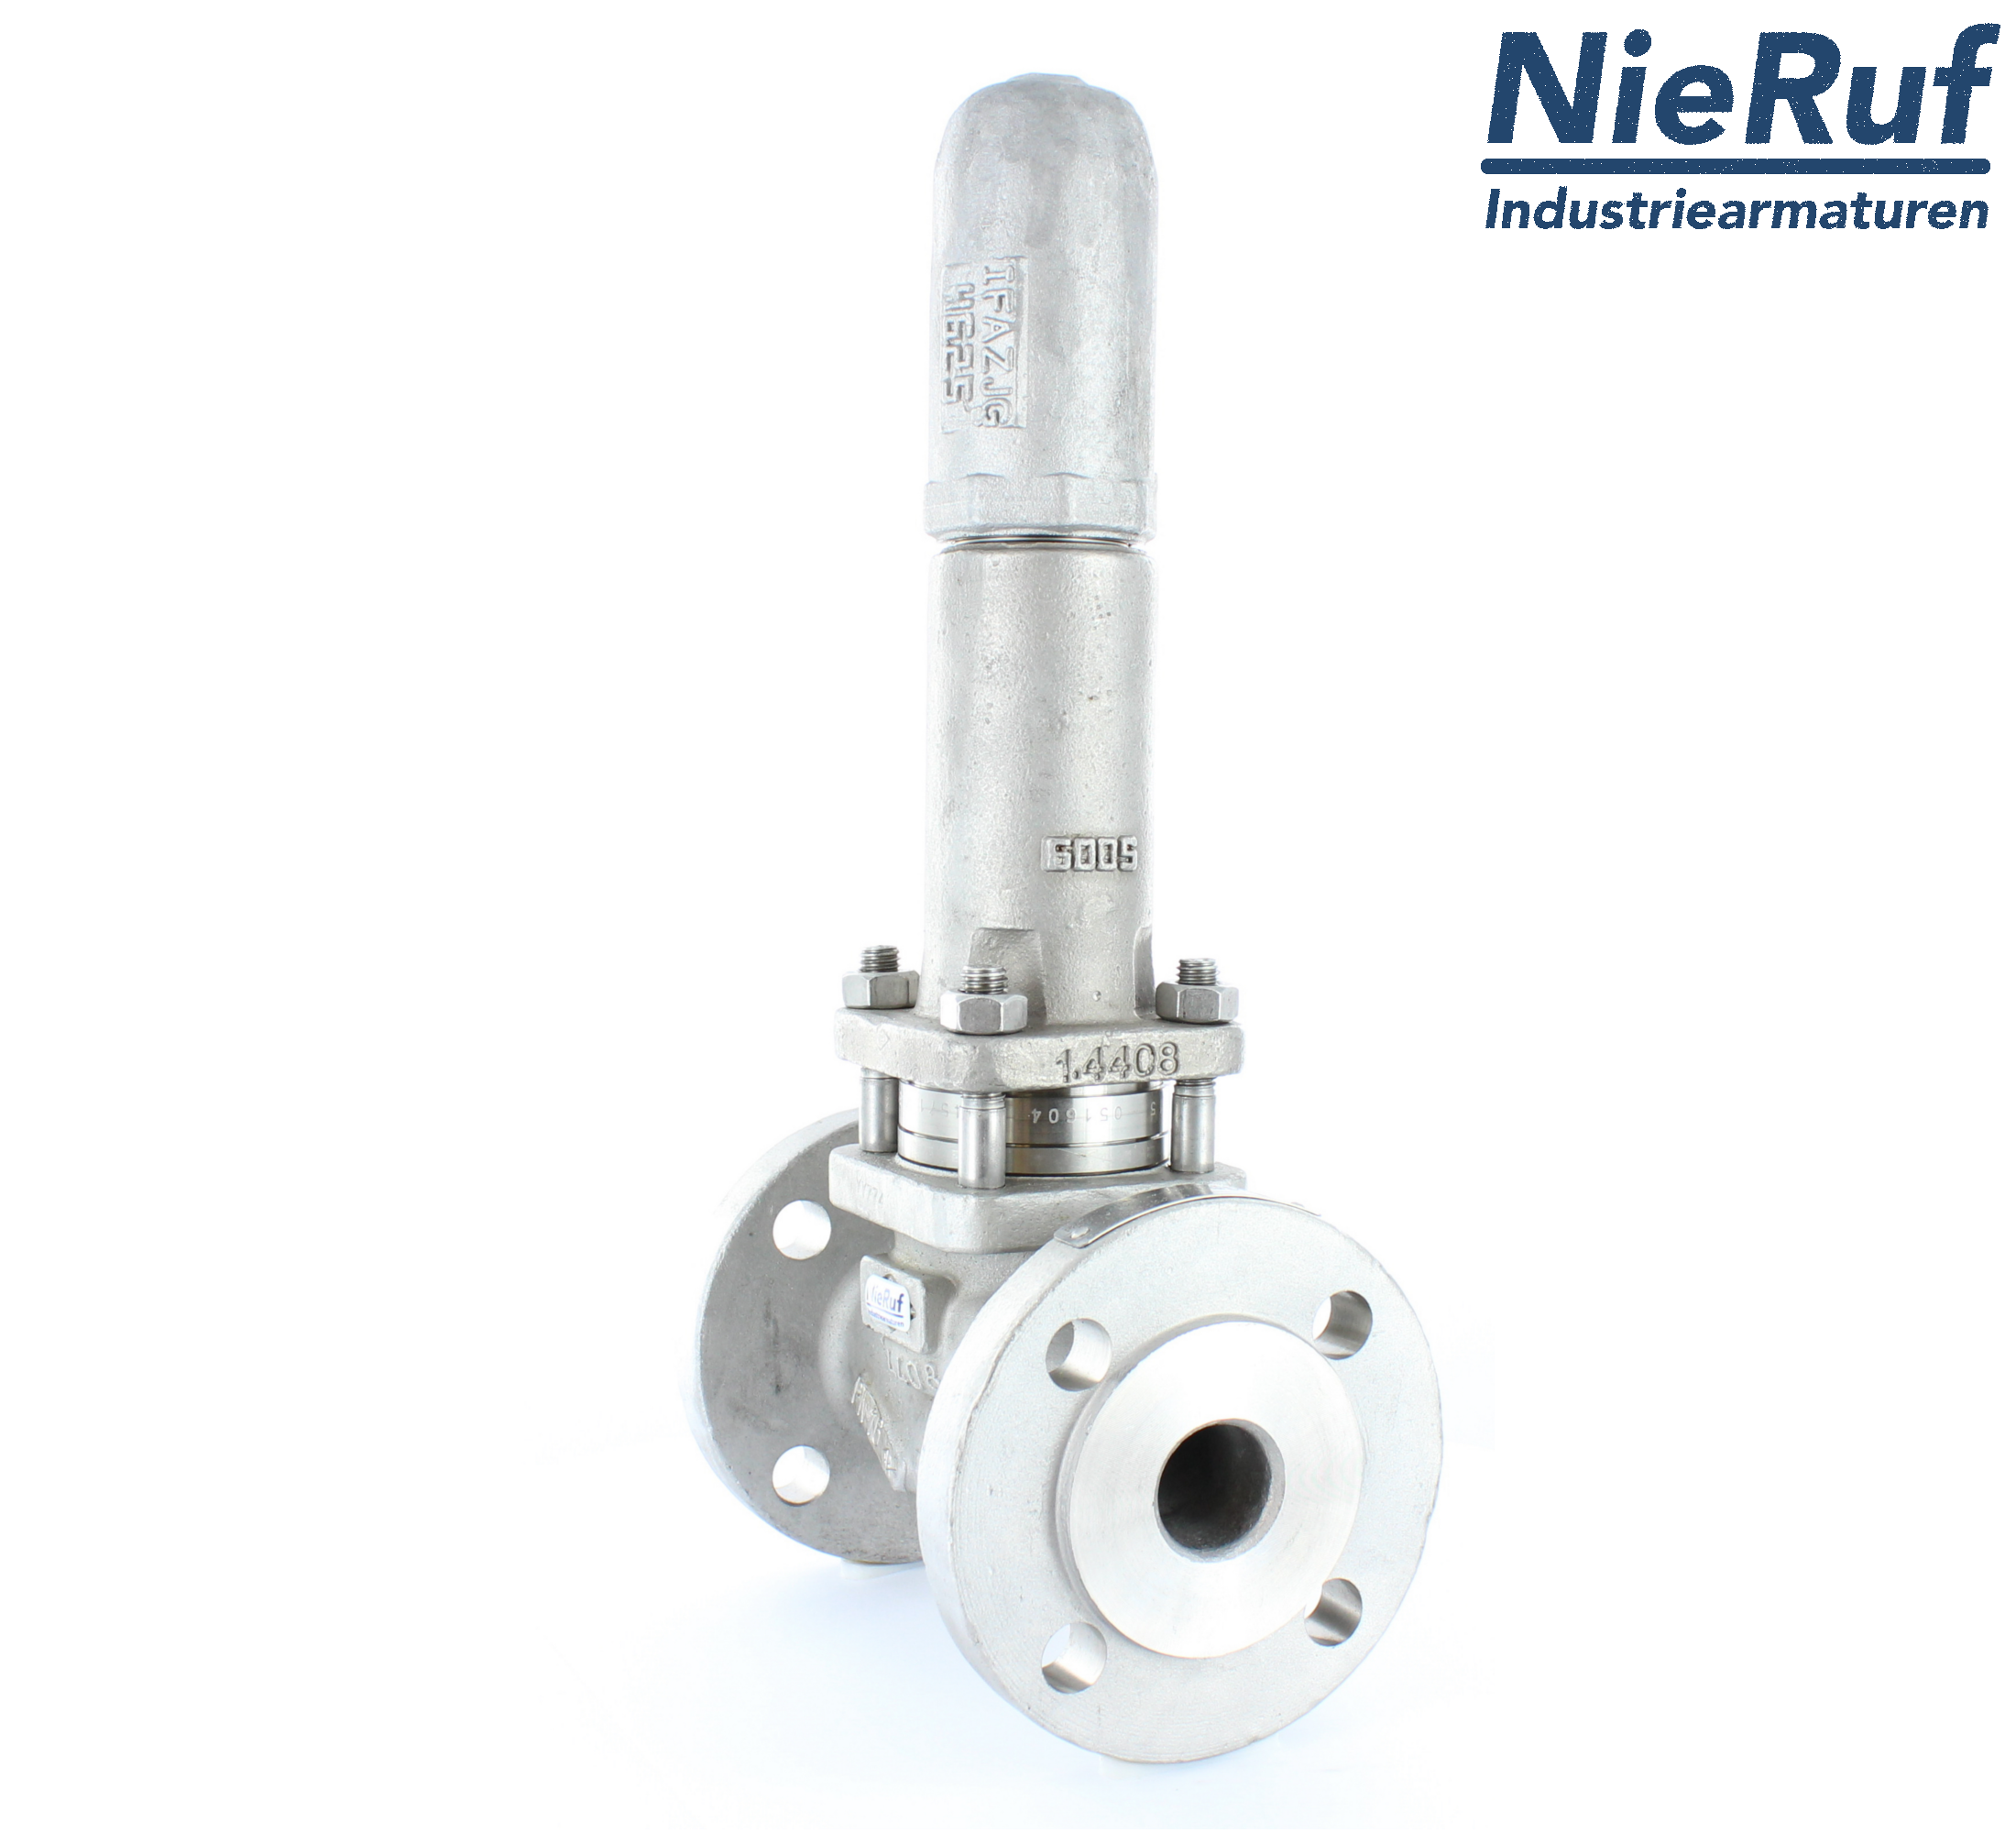 piston overflow valve DN 65 UV13 stainless steel AISI 316L 0,5 - 1,5 bar